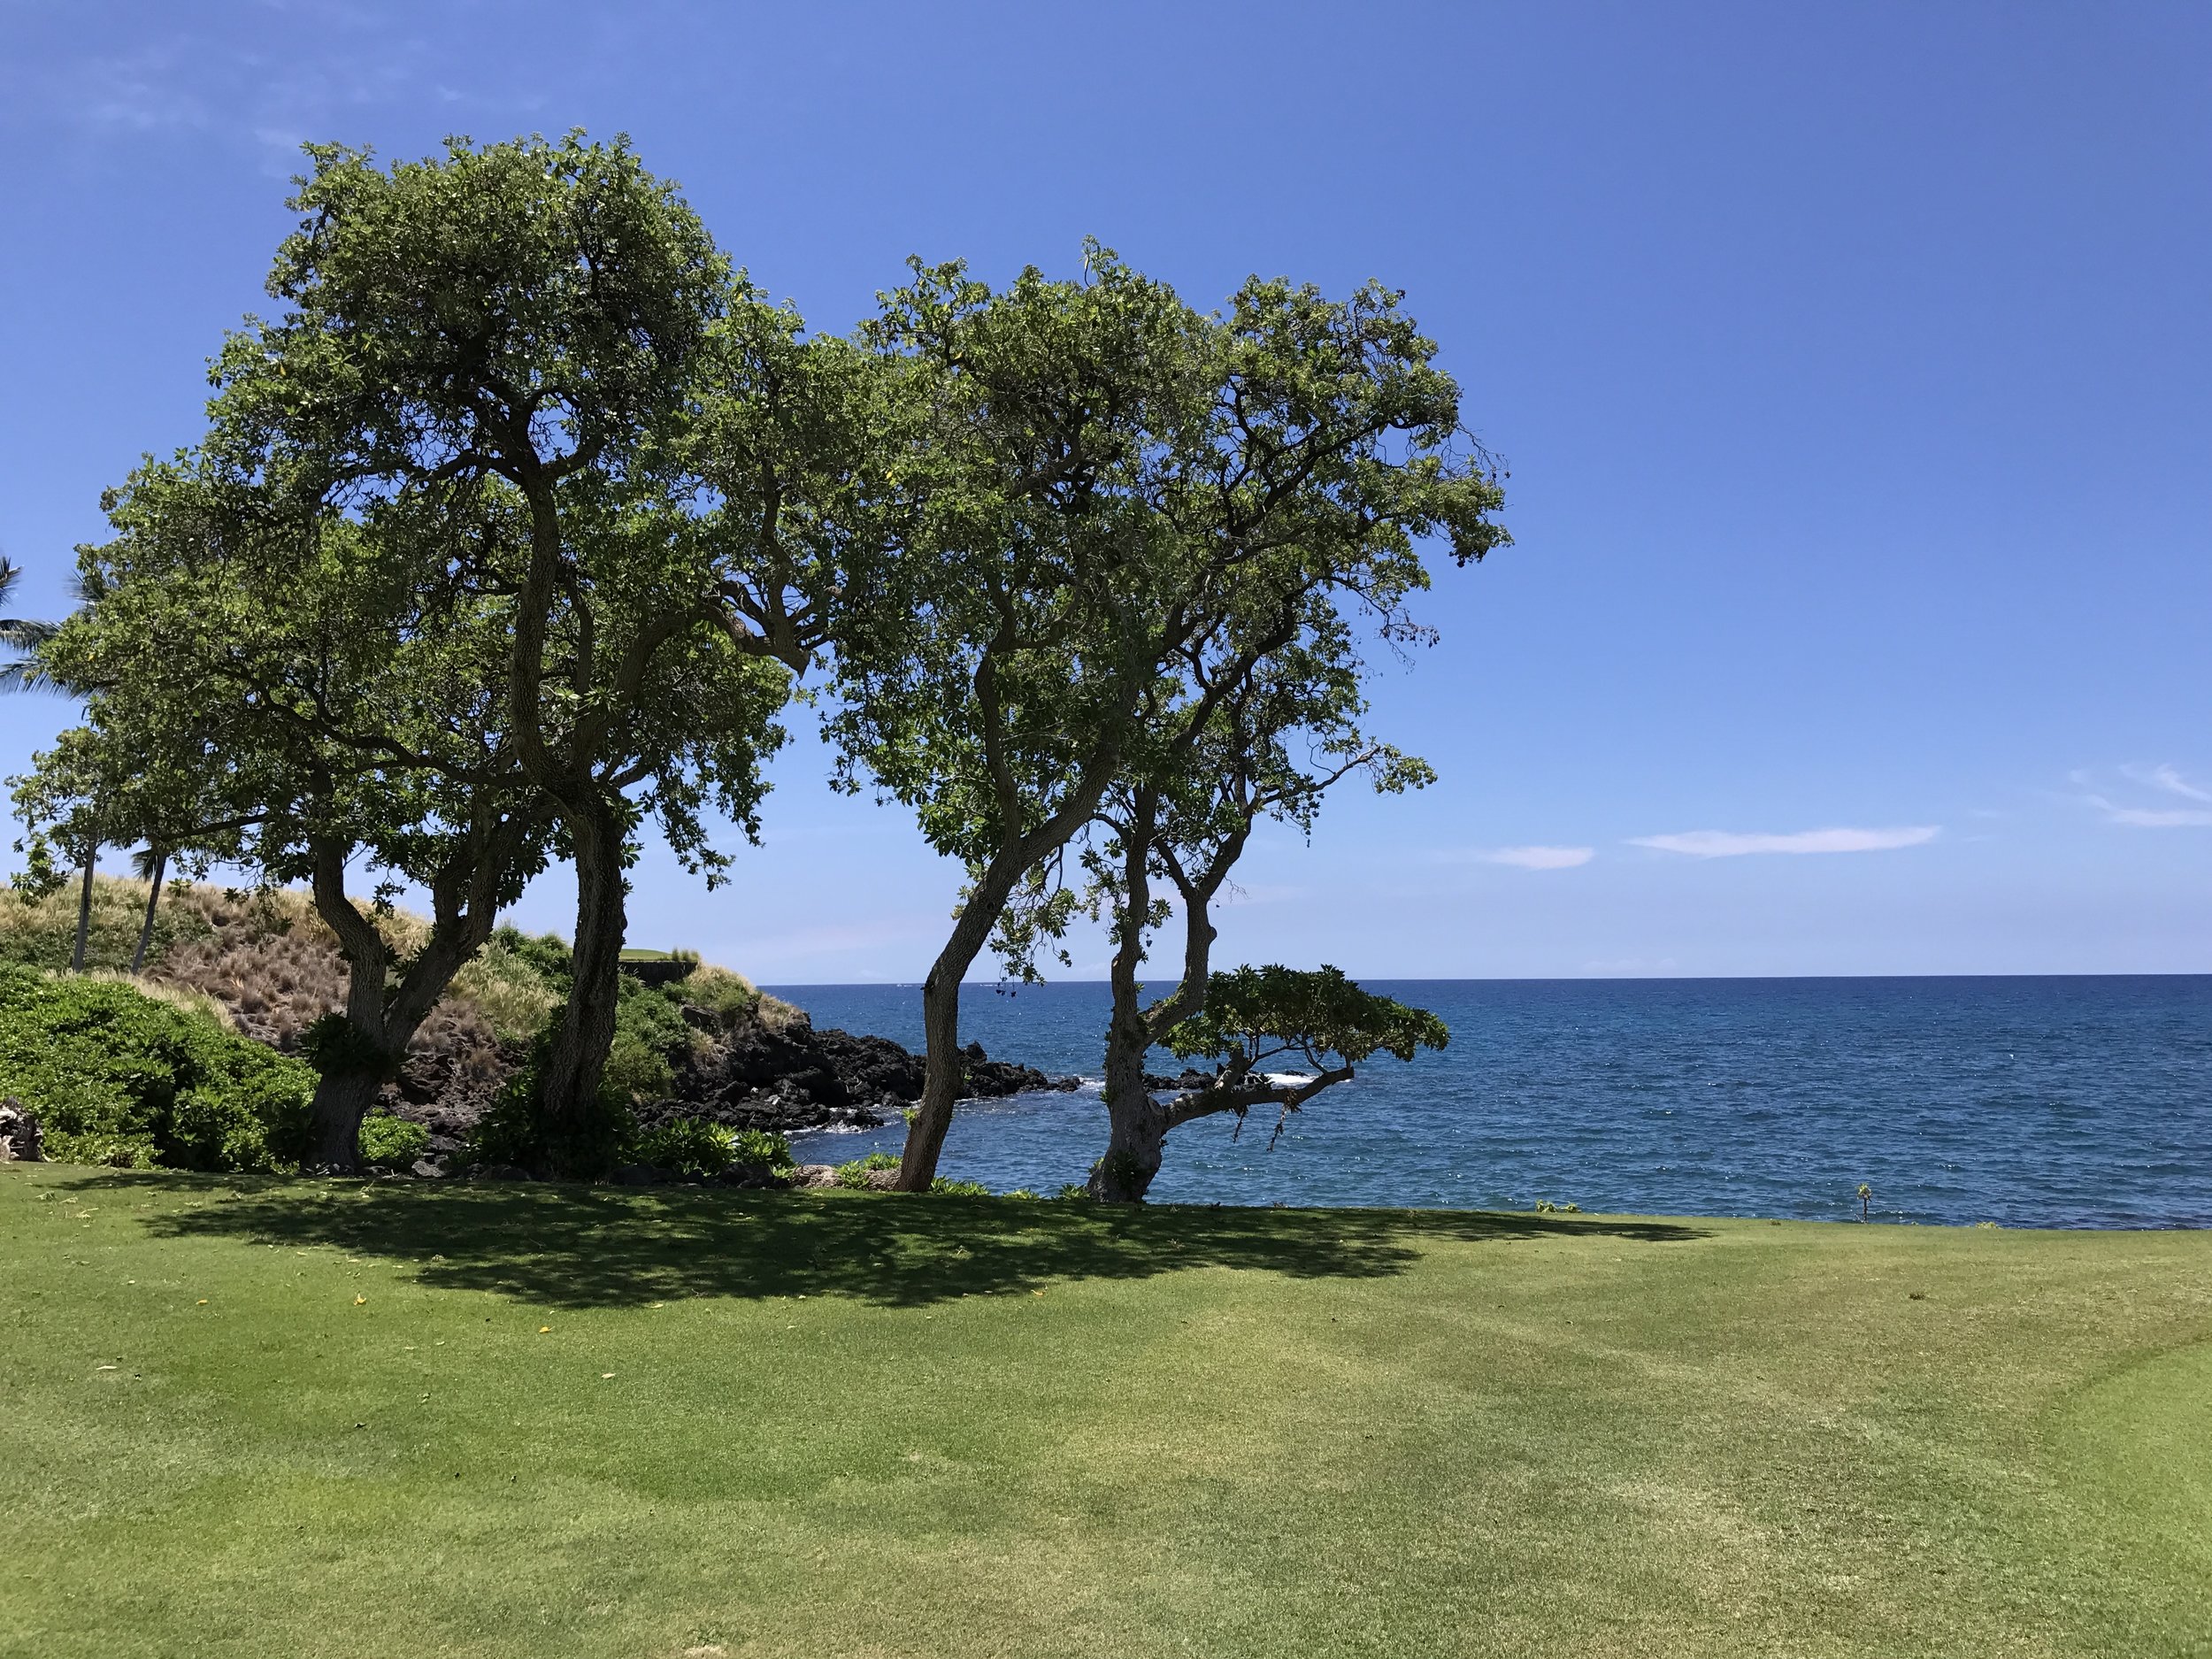 Maune Kea Golf Course